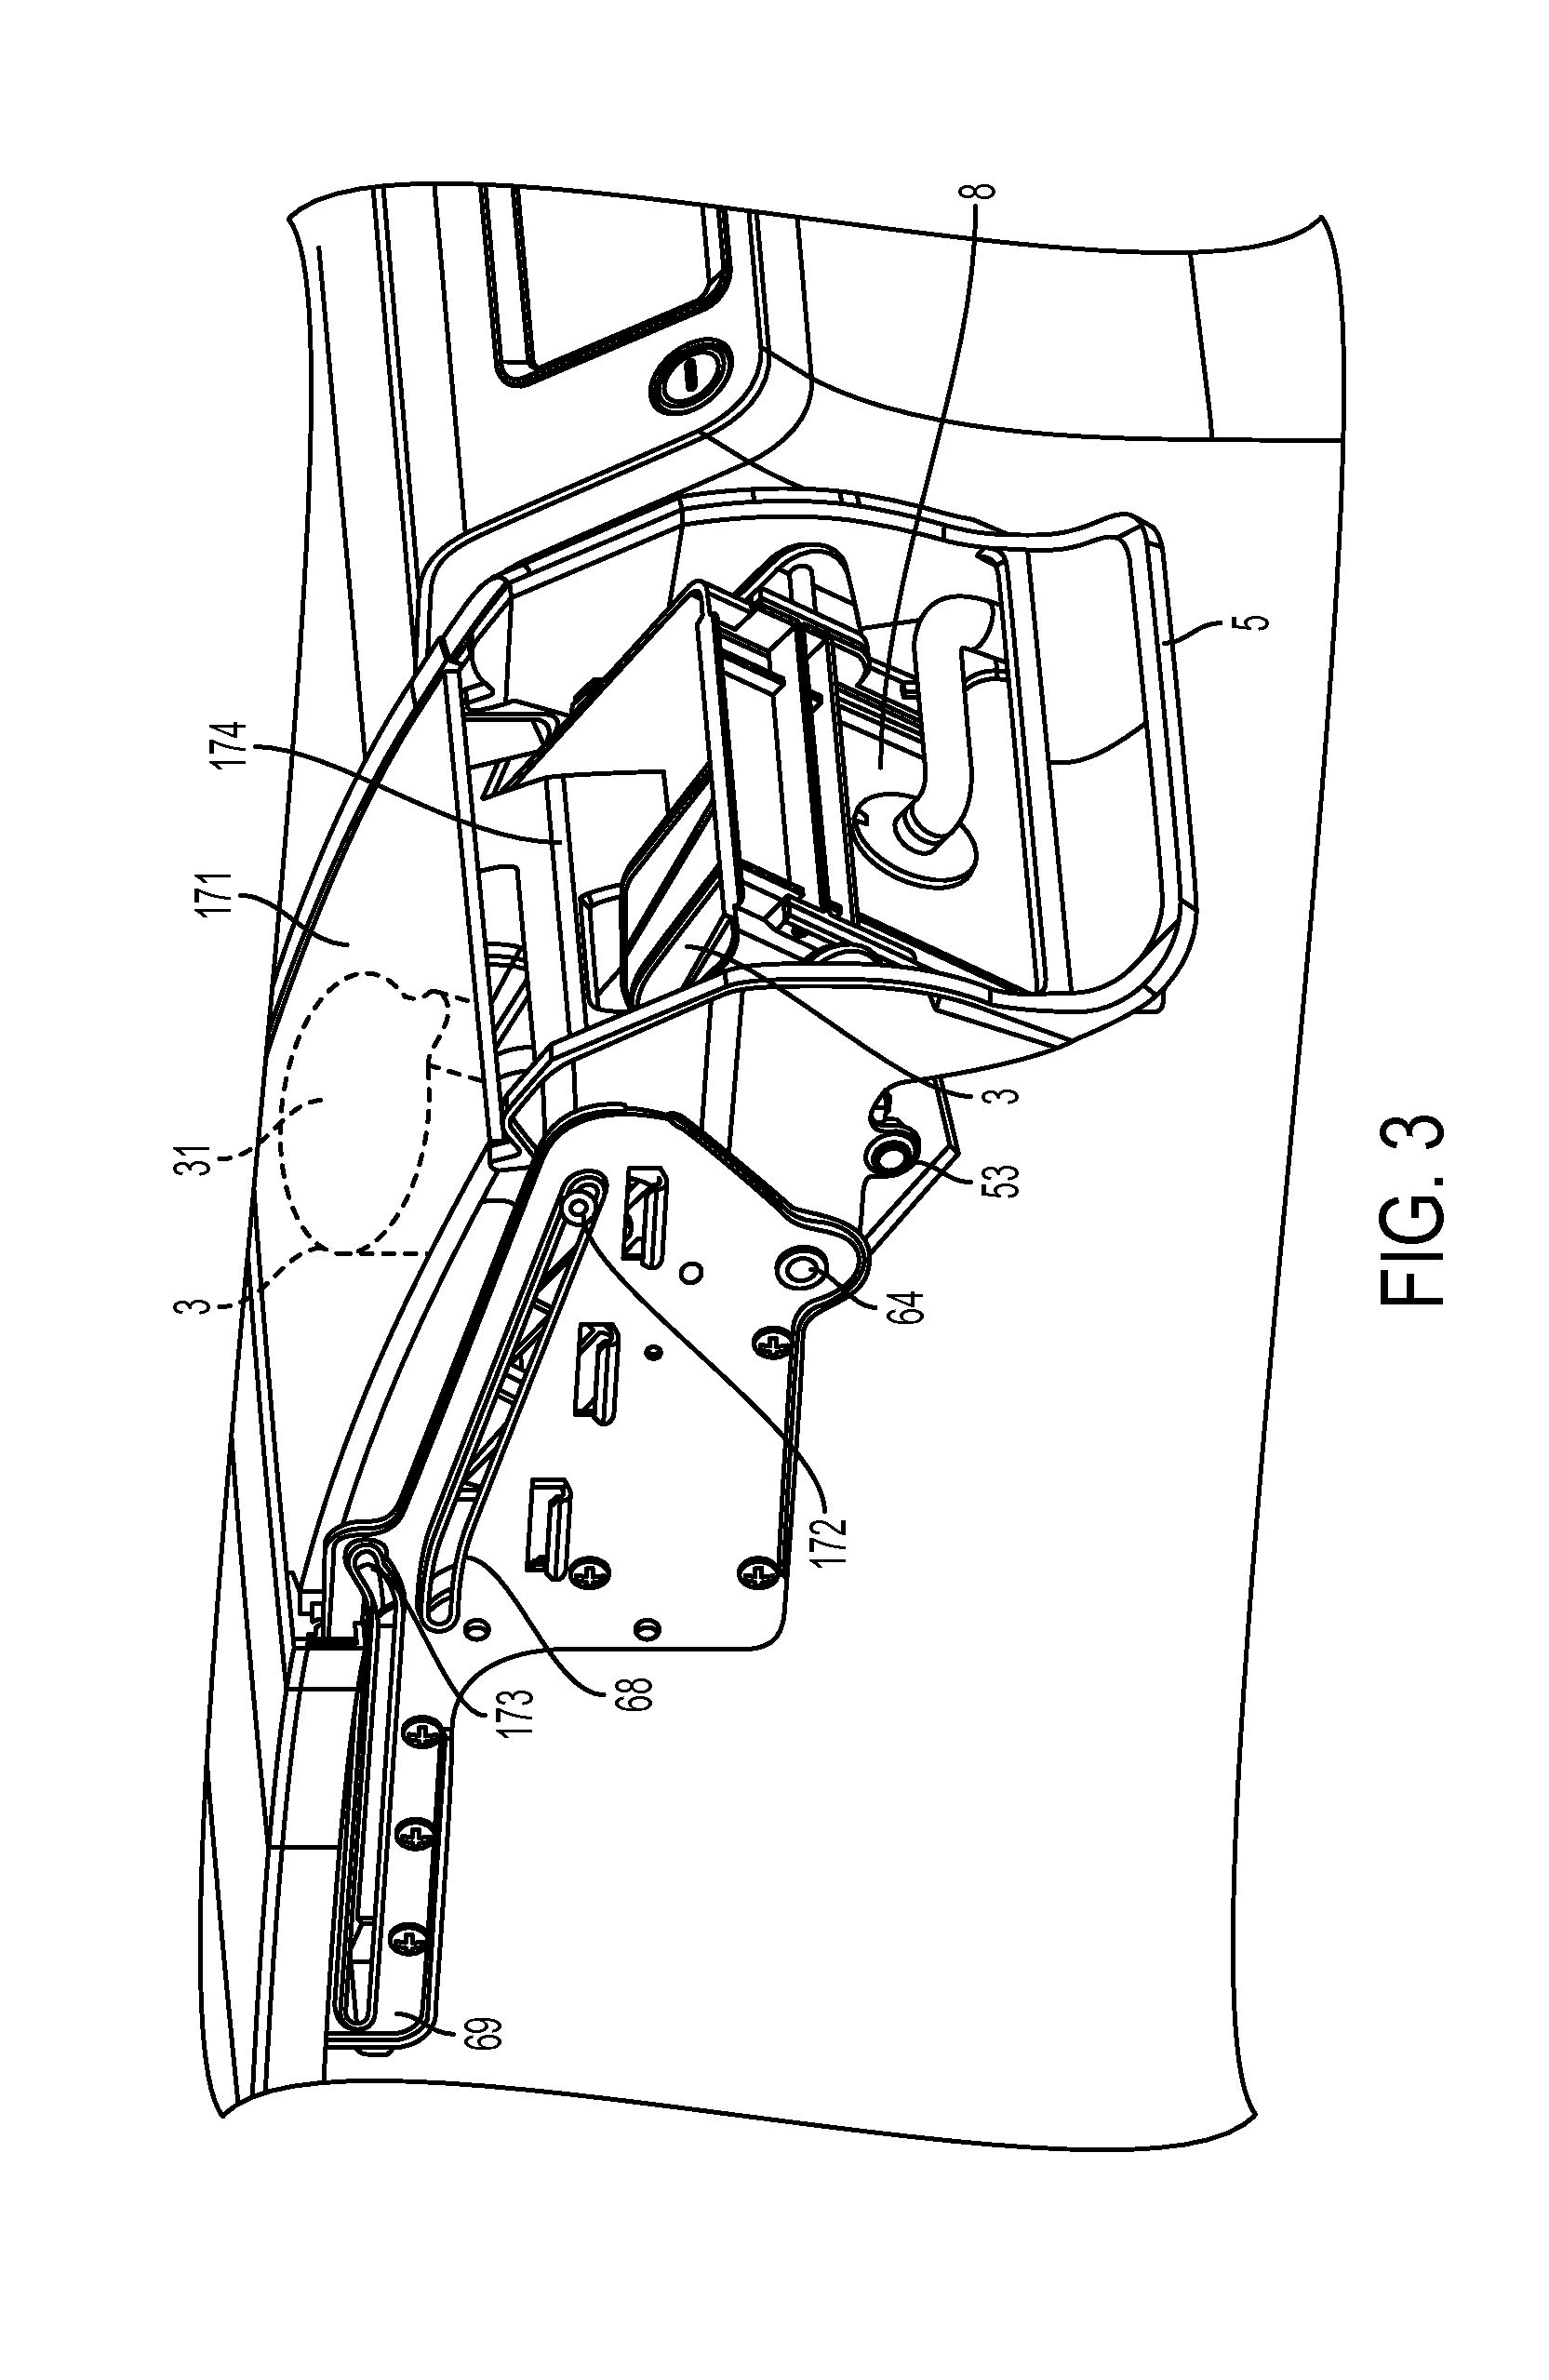 Beverage machine cartridge holder with damped movement